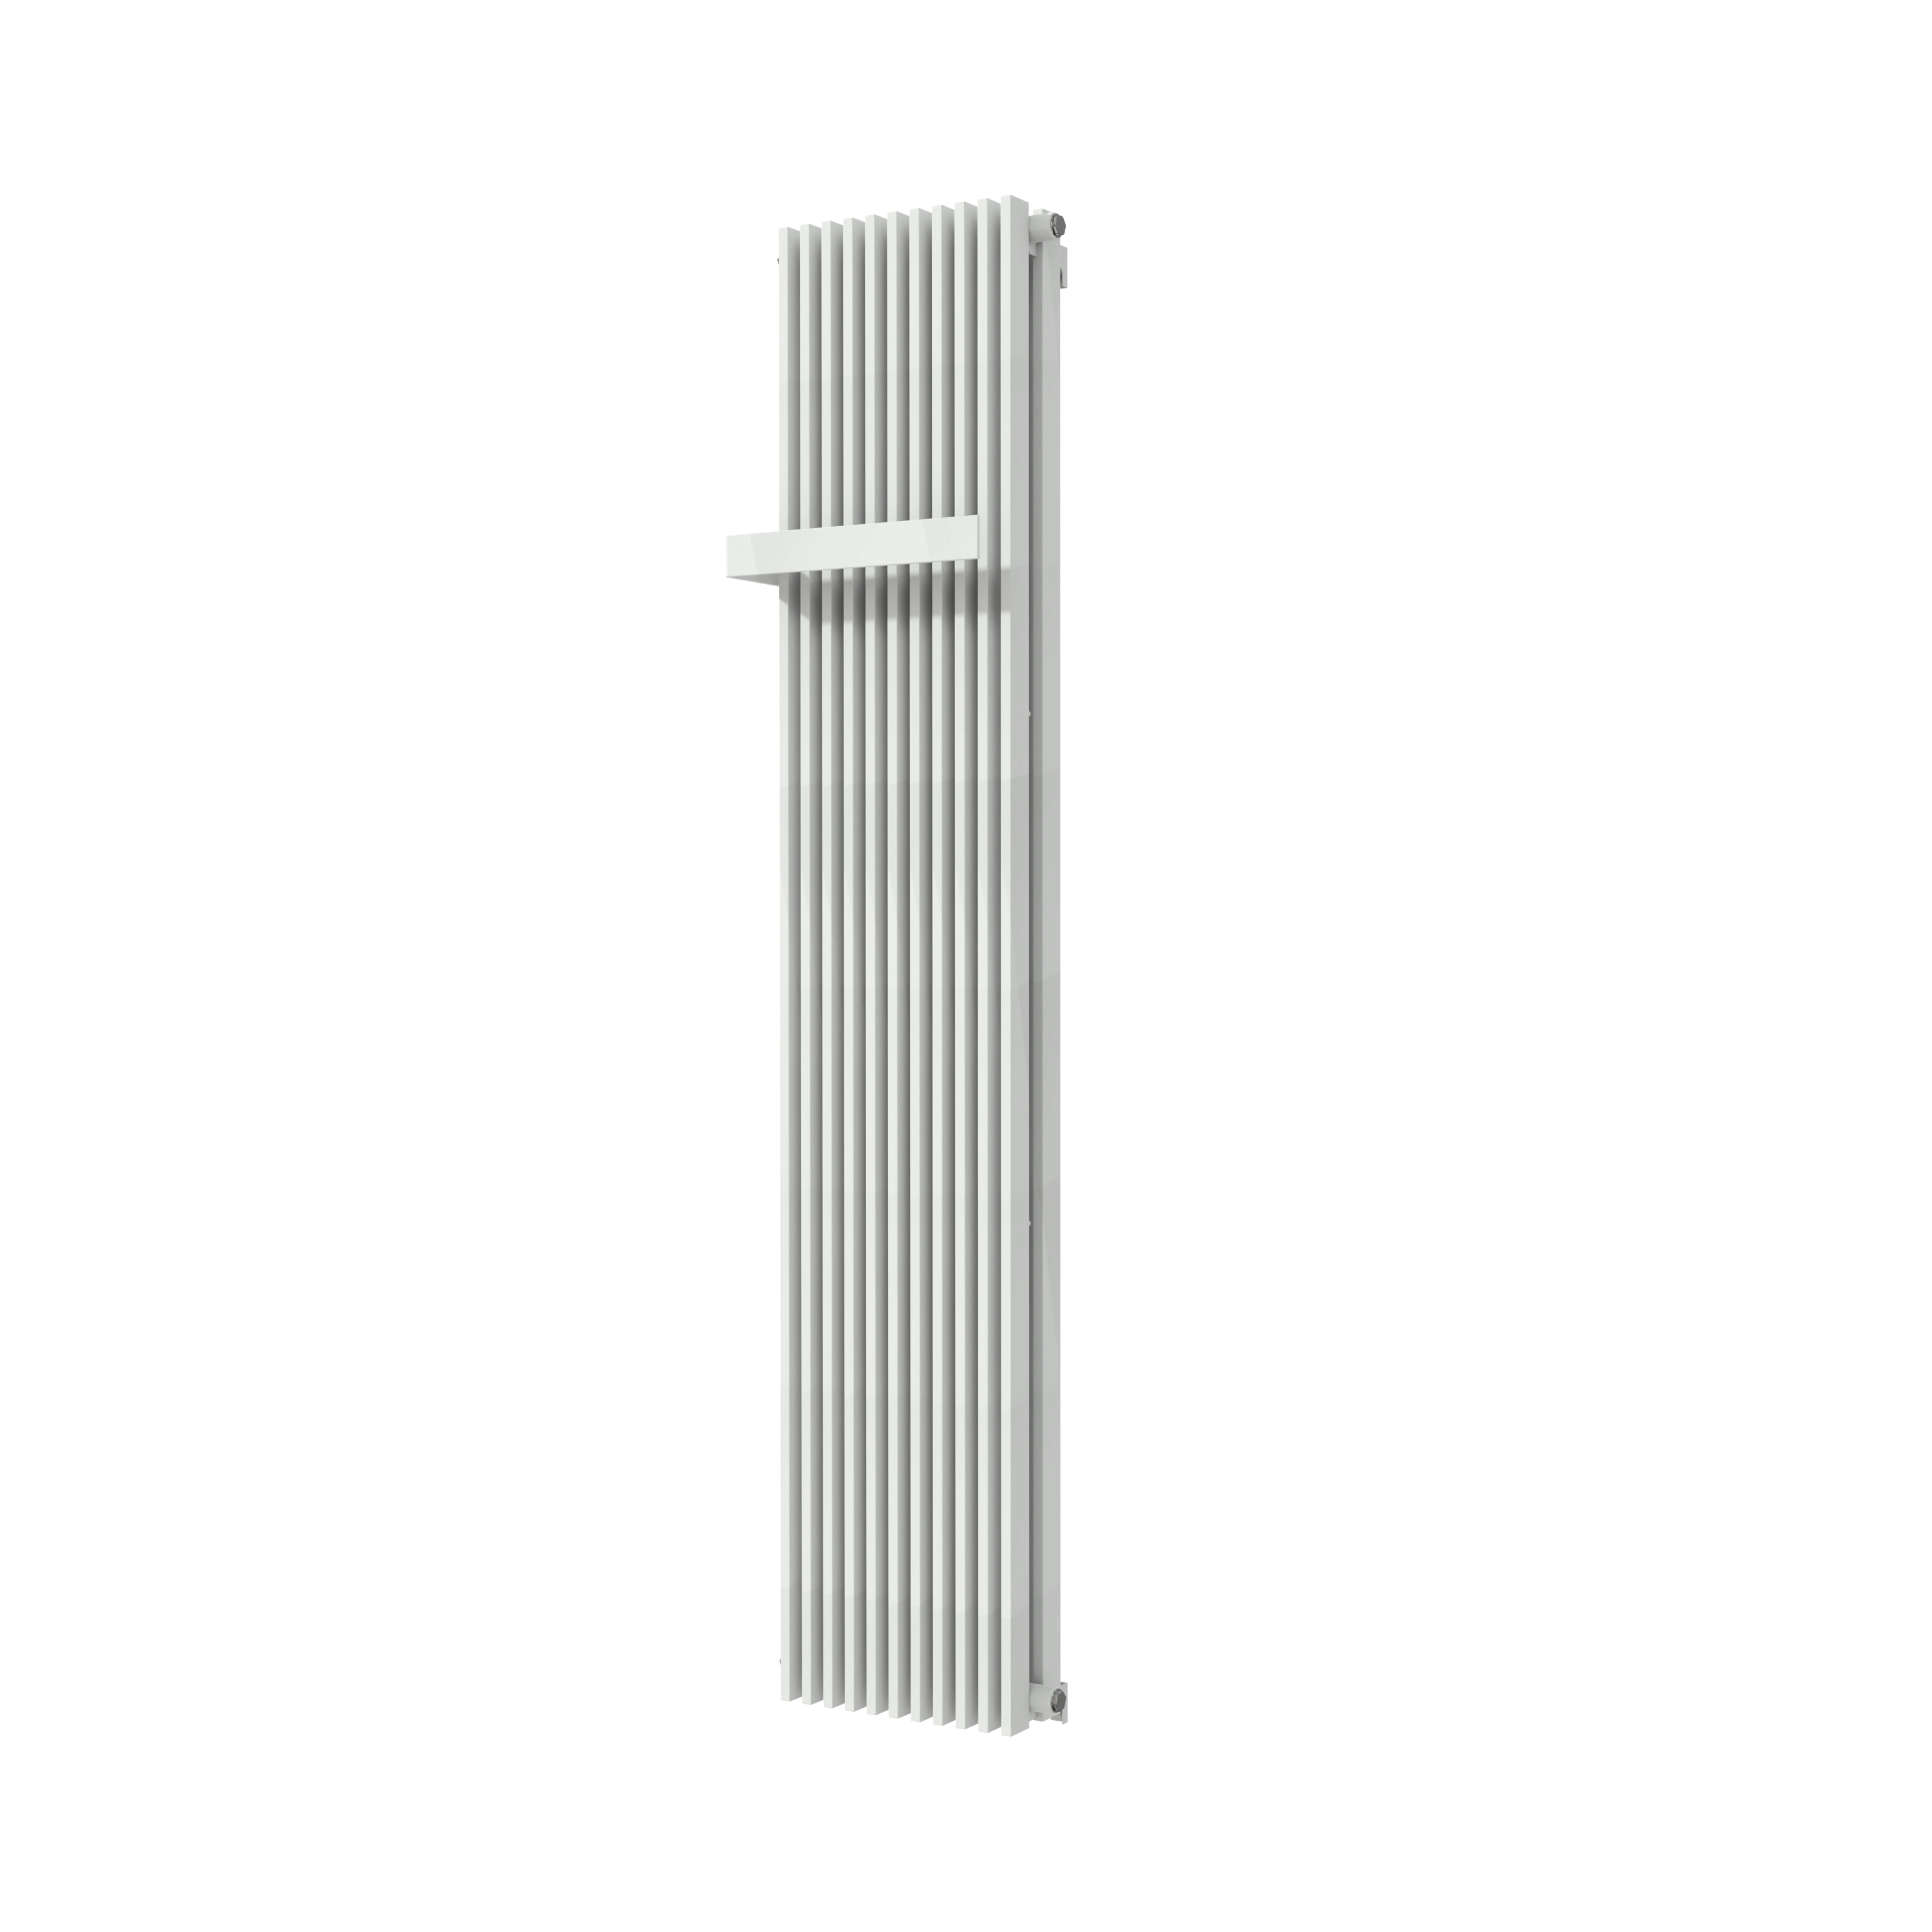 Vipera Corrason dubbele badkamerradiator 40 x 180 cm centrale verwarming mat wit zij- en middenaansluiting 2,238W